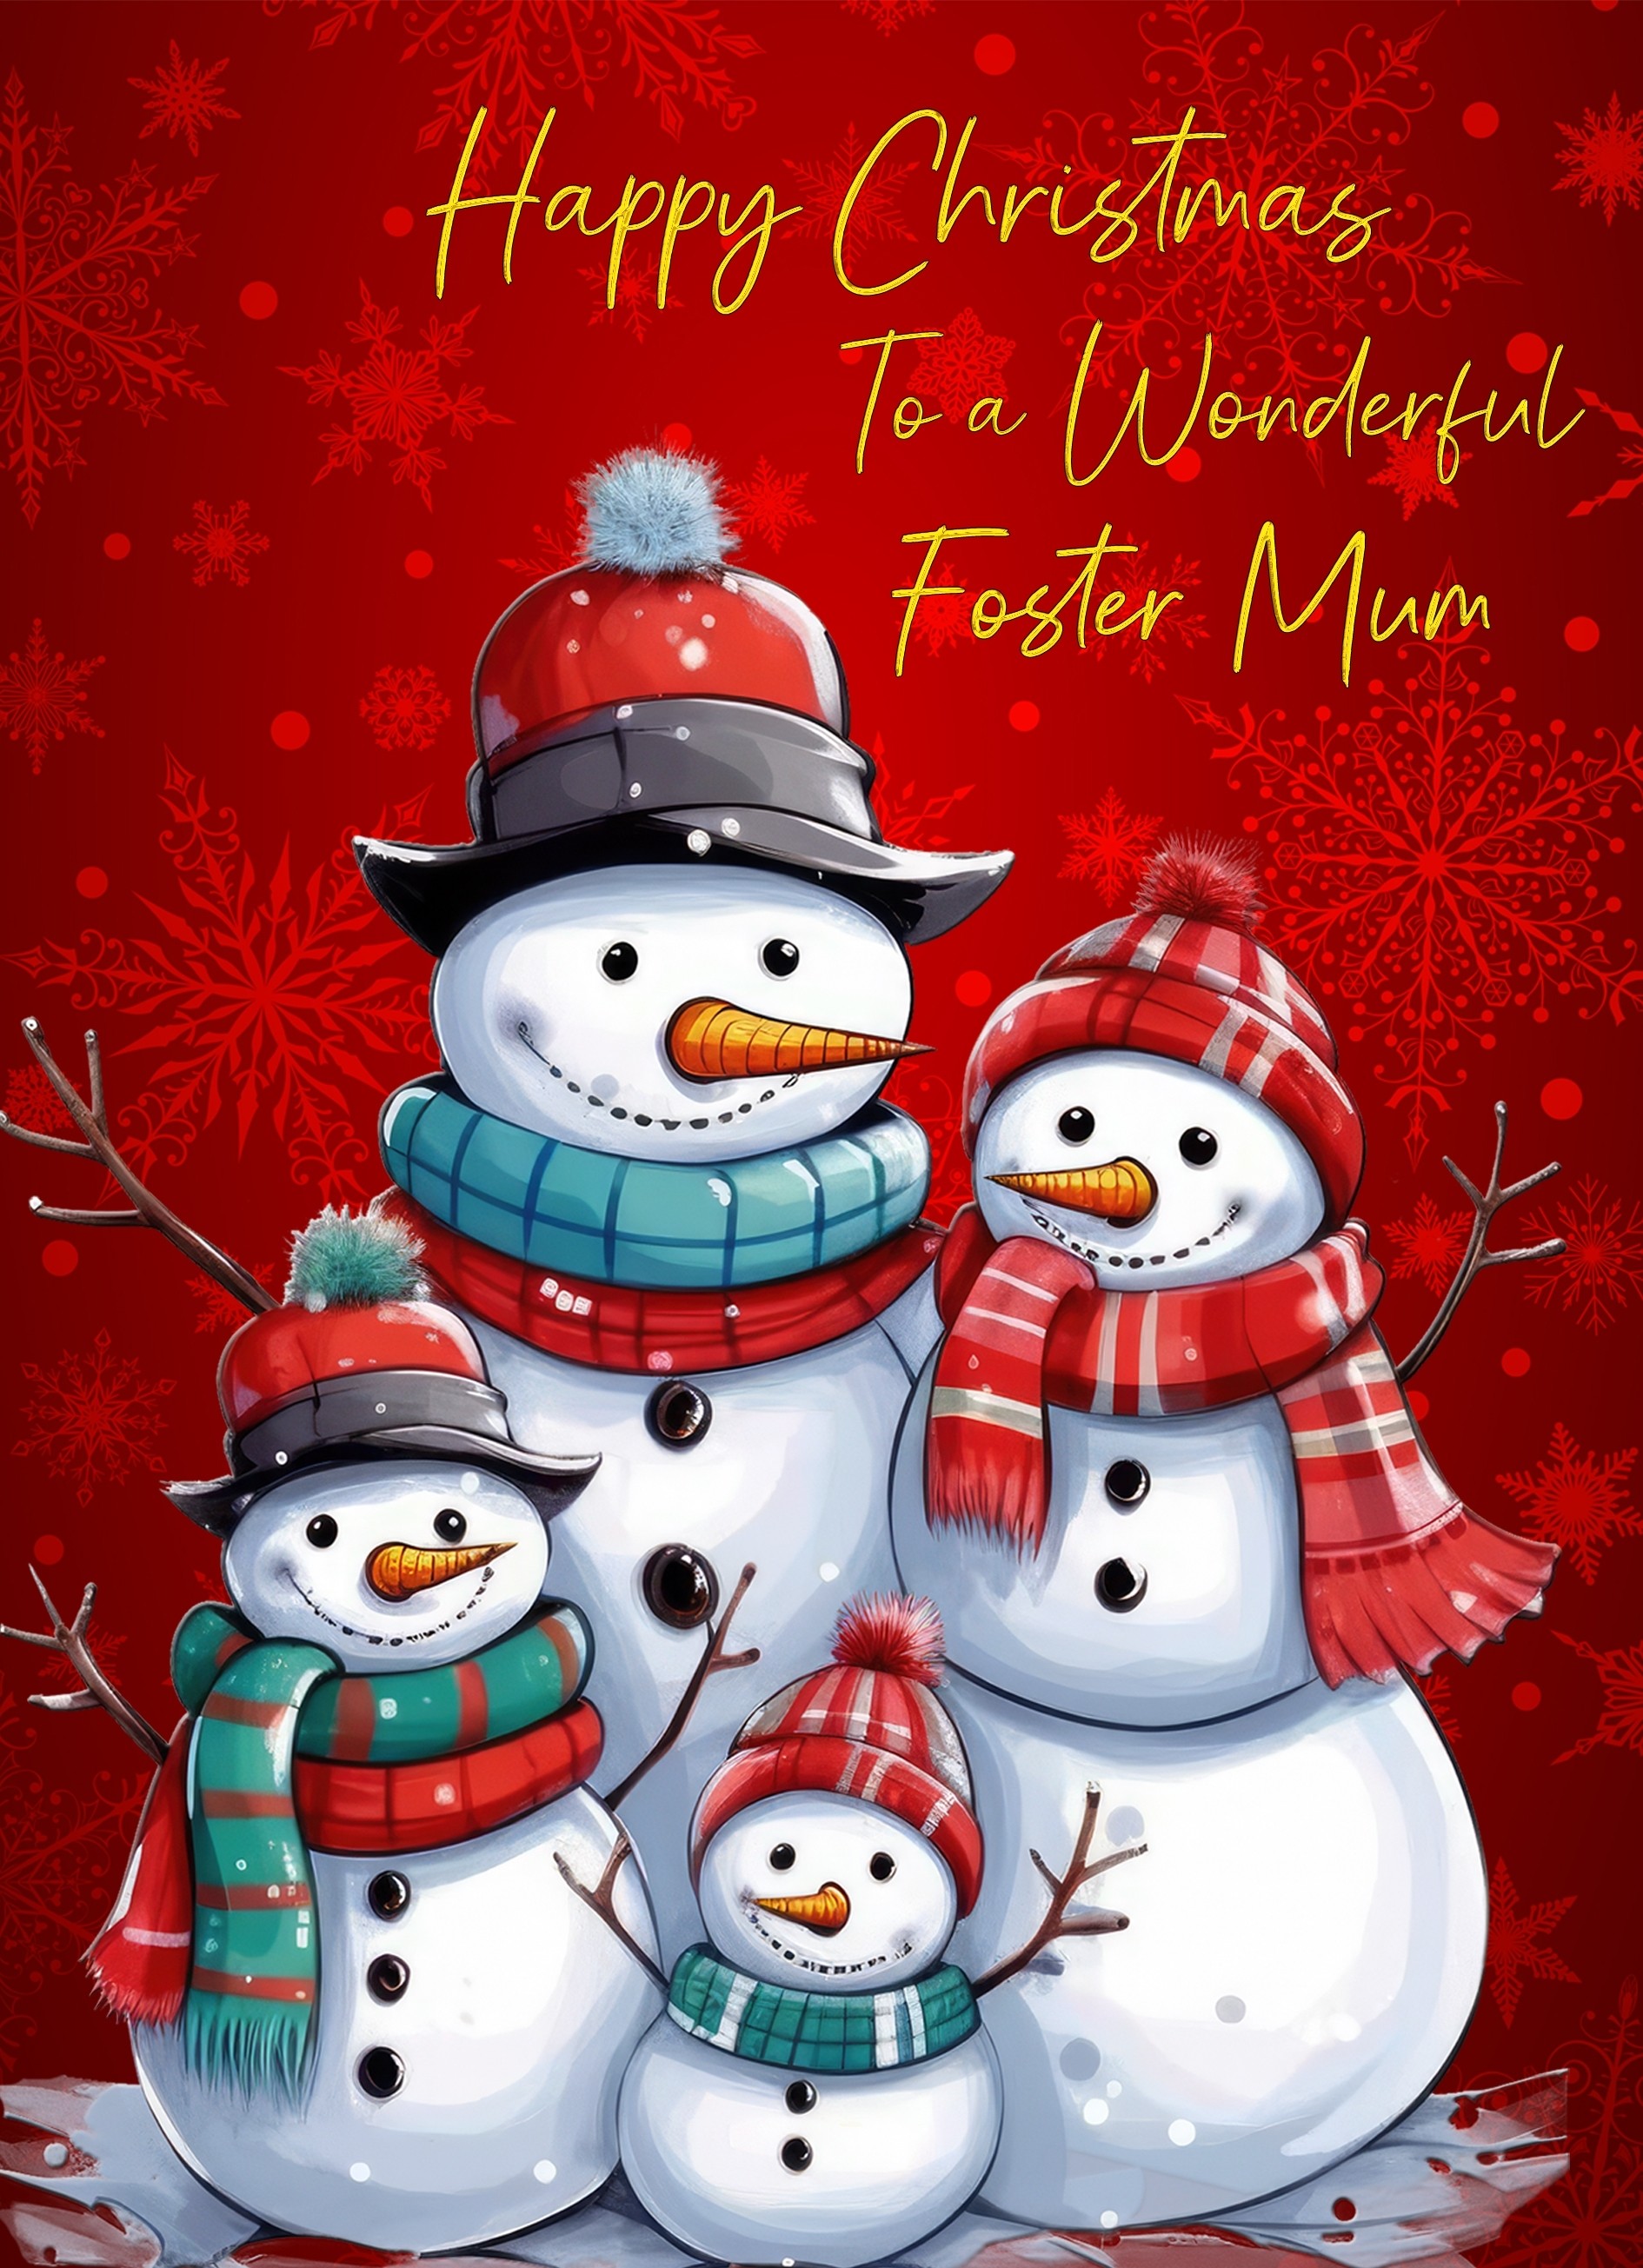 Christmas Card For Foster Mum (Snowman, Design 10)